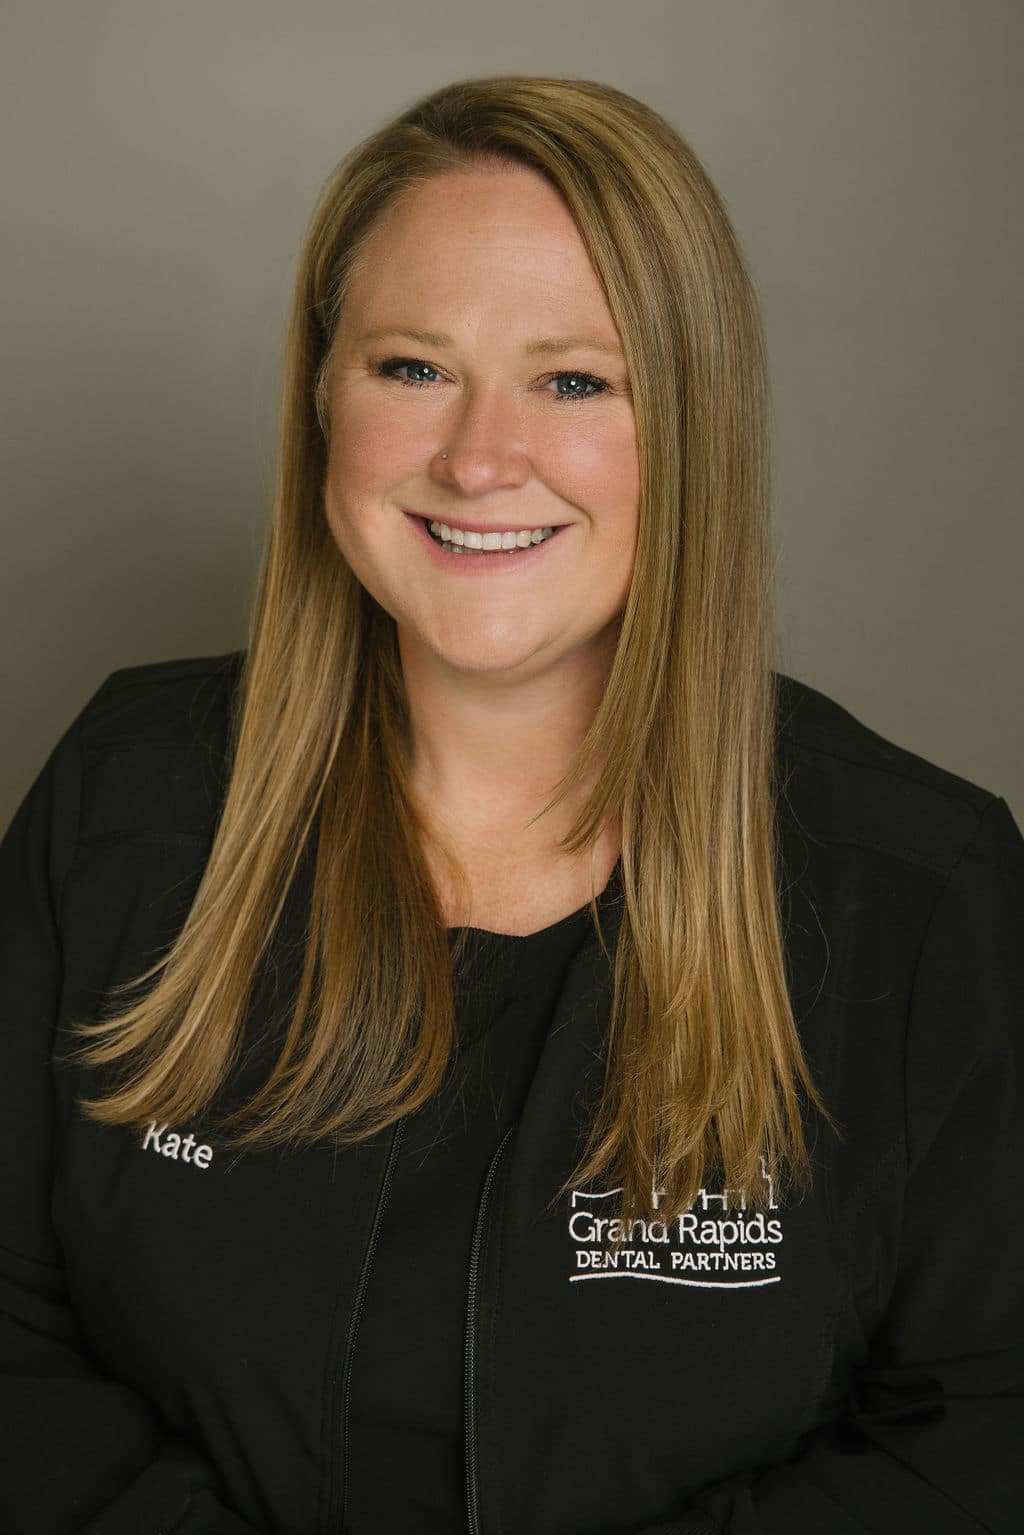 Grand Rapids Dental Partners - Kate, Dental Hygienist